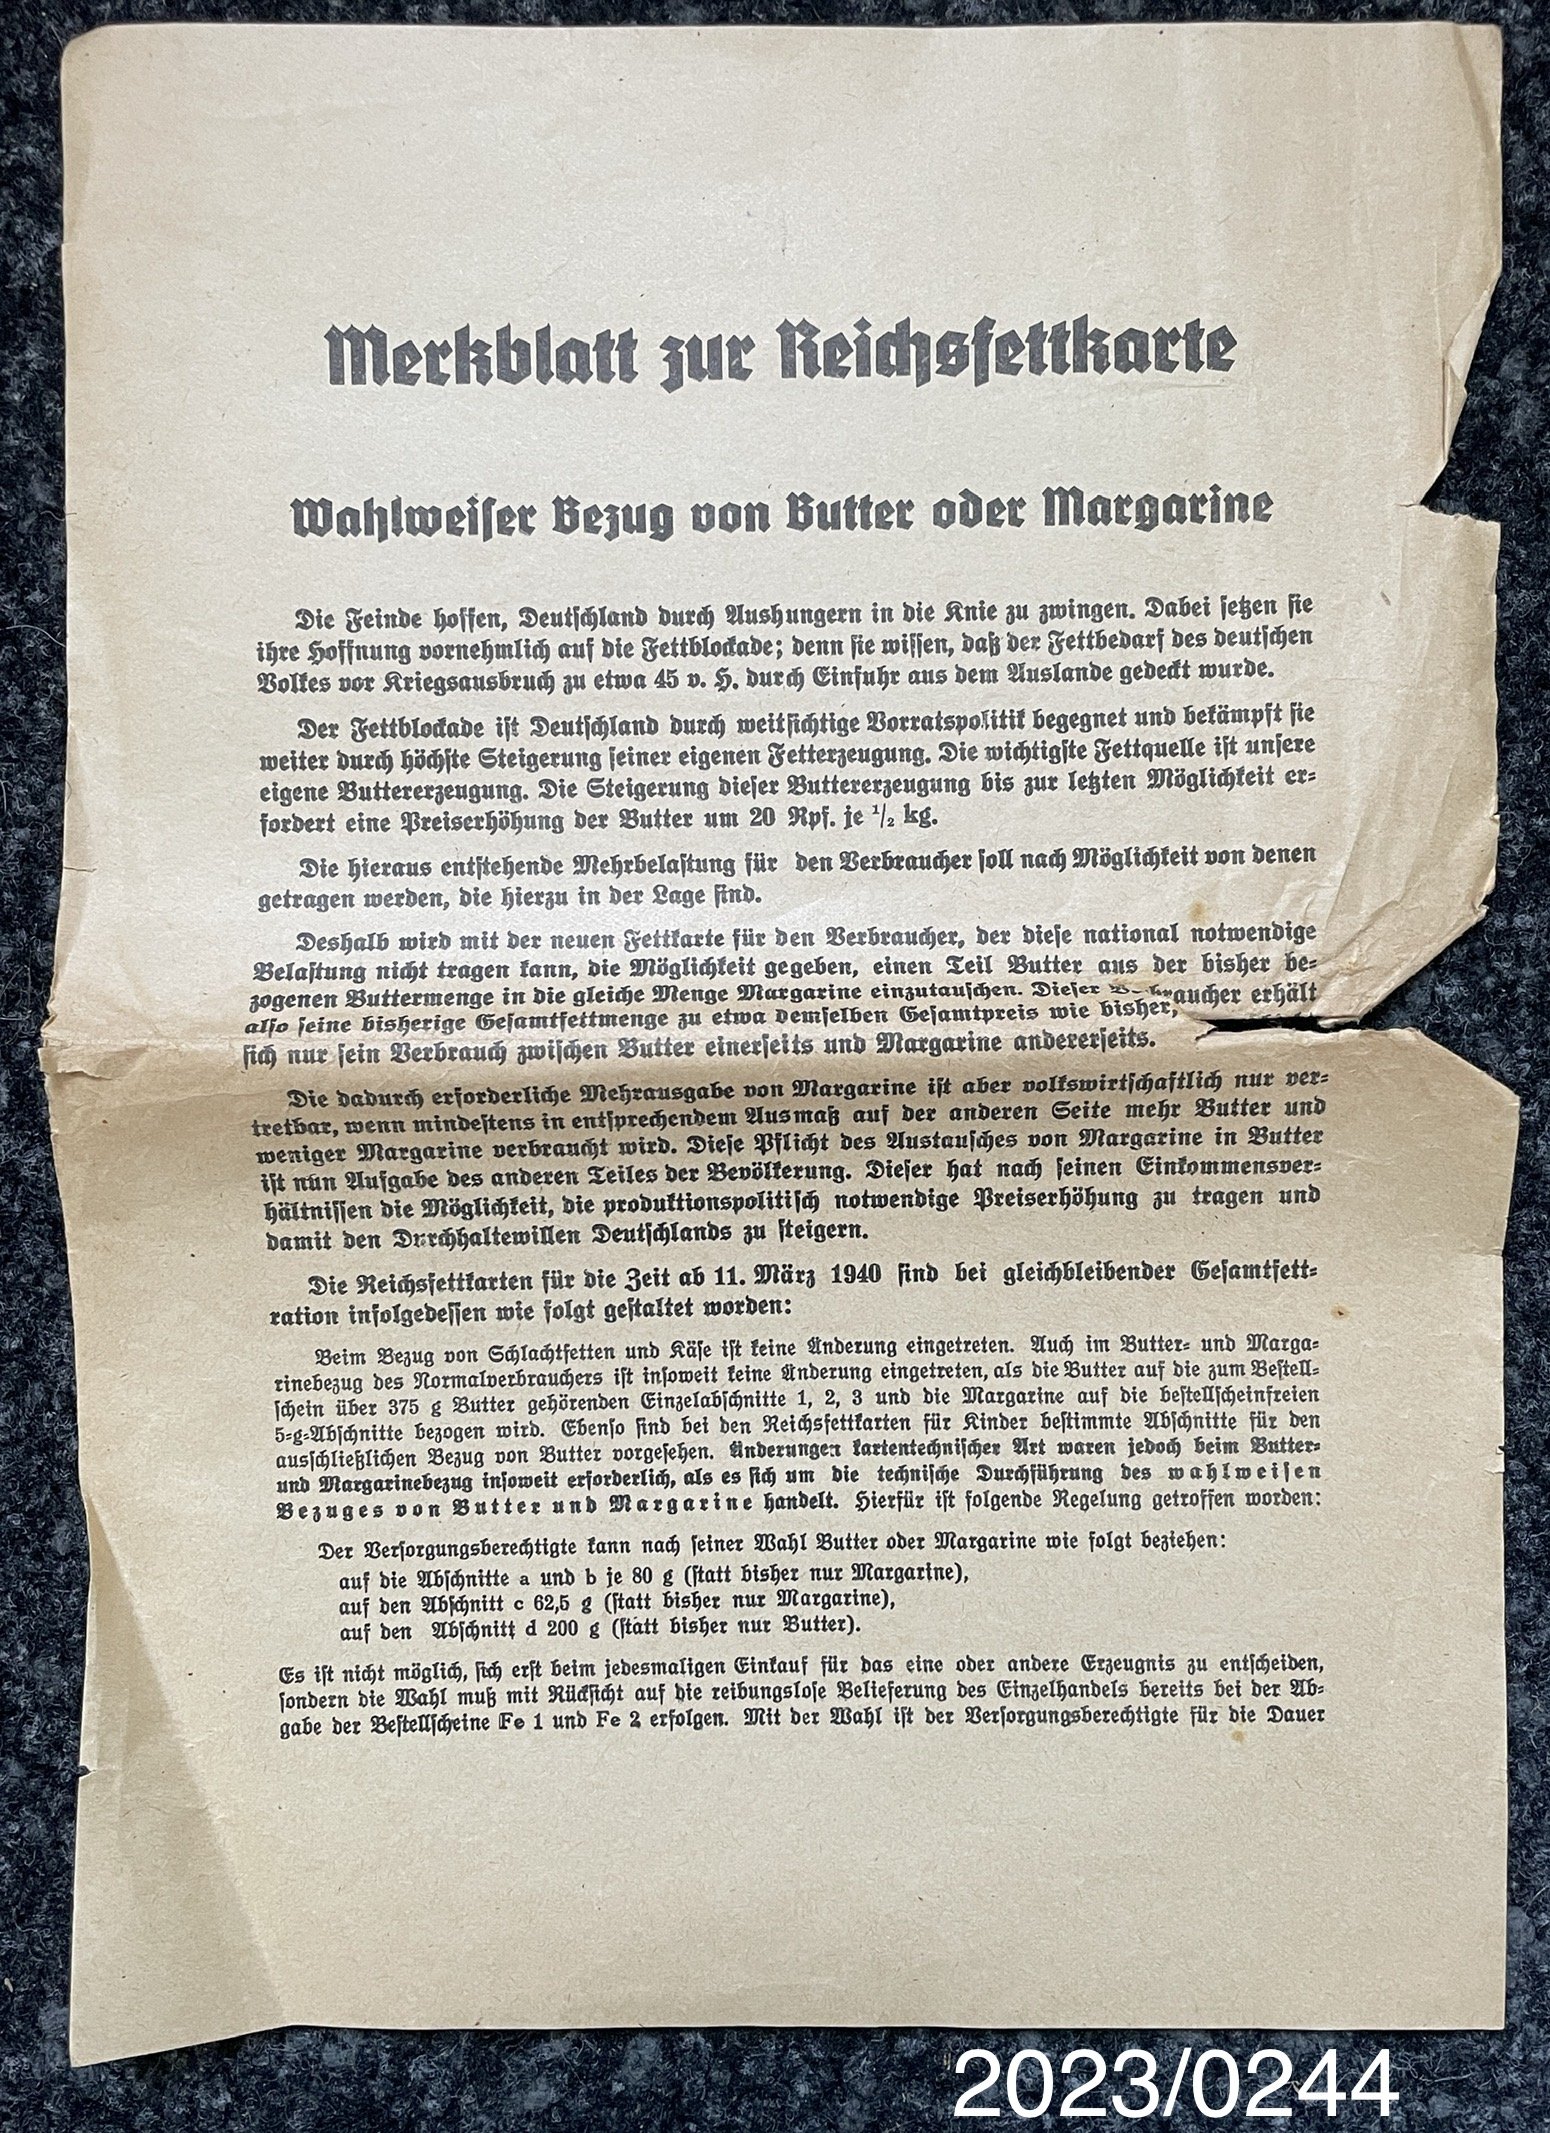 Merkblatt zur Reichsfettkarte 1940 (Stadtmuseum Bad Dürkheim im Kulturzentrum Haus Catoir CC BY-NC-SA)